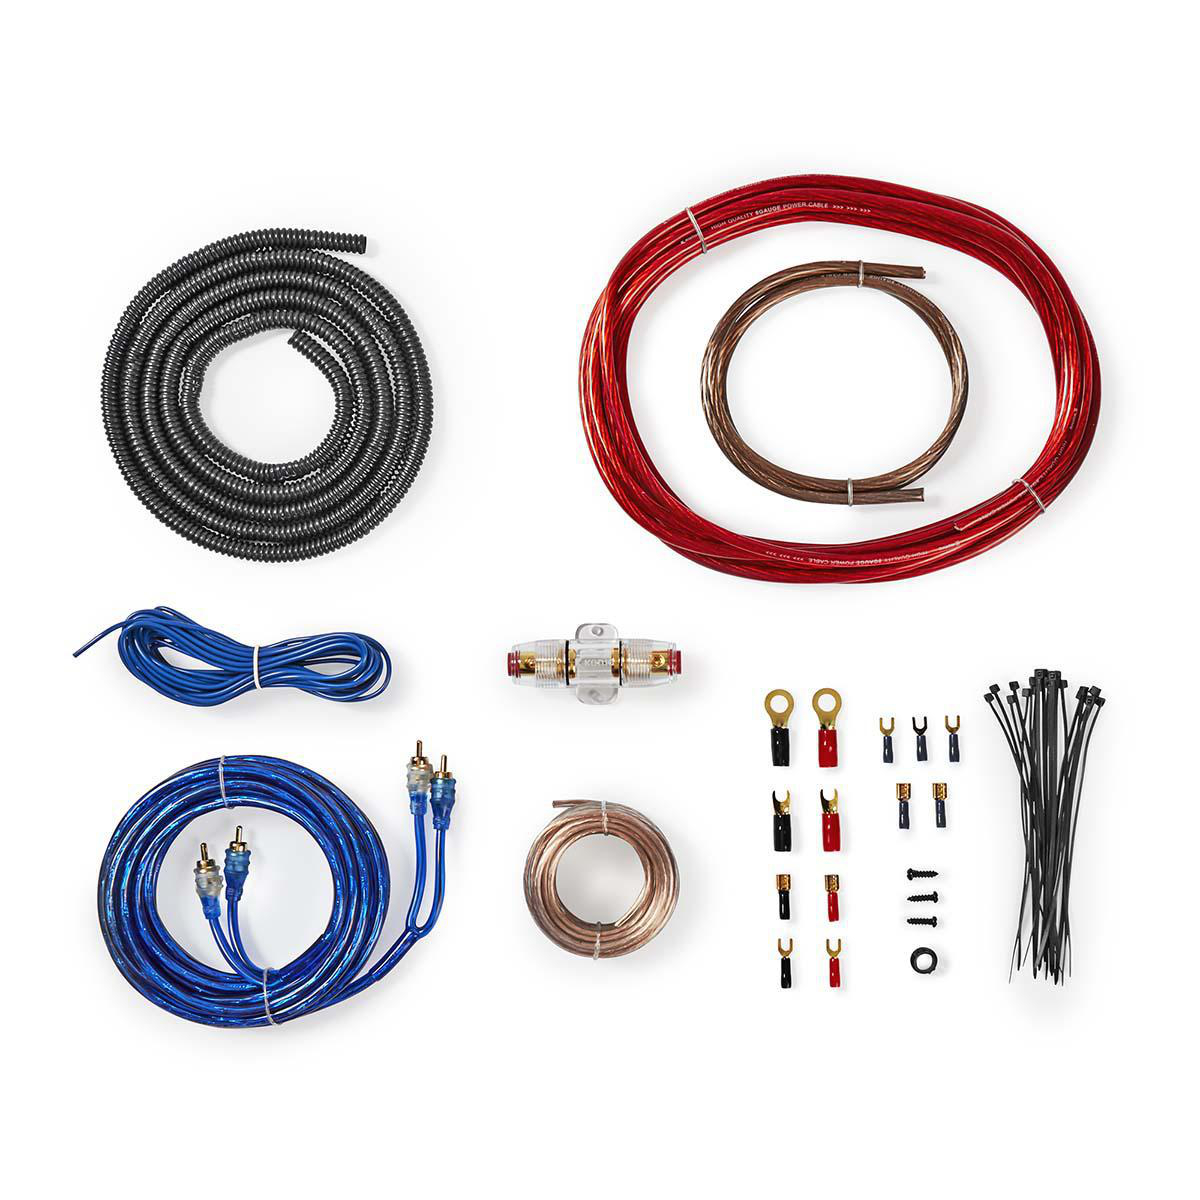 verkoper Postcode ui Car Audio Connector Kit | 800 W | Nickel Plated | Blister